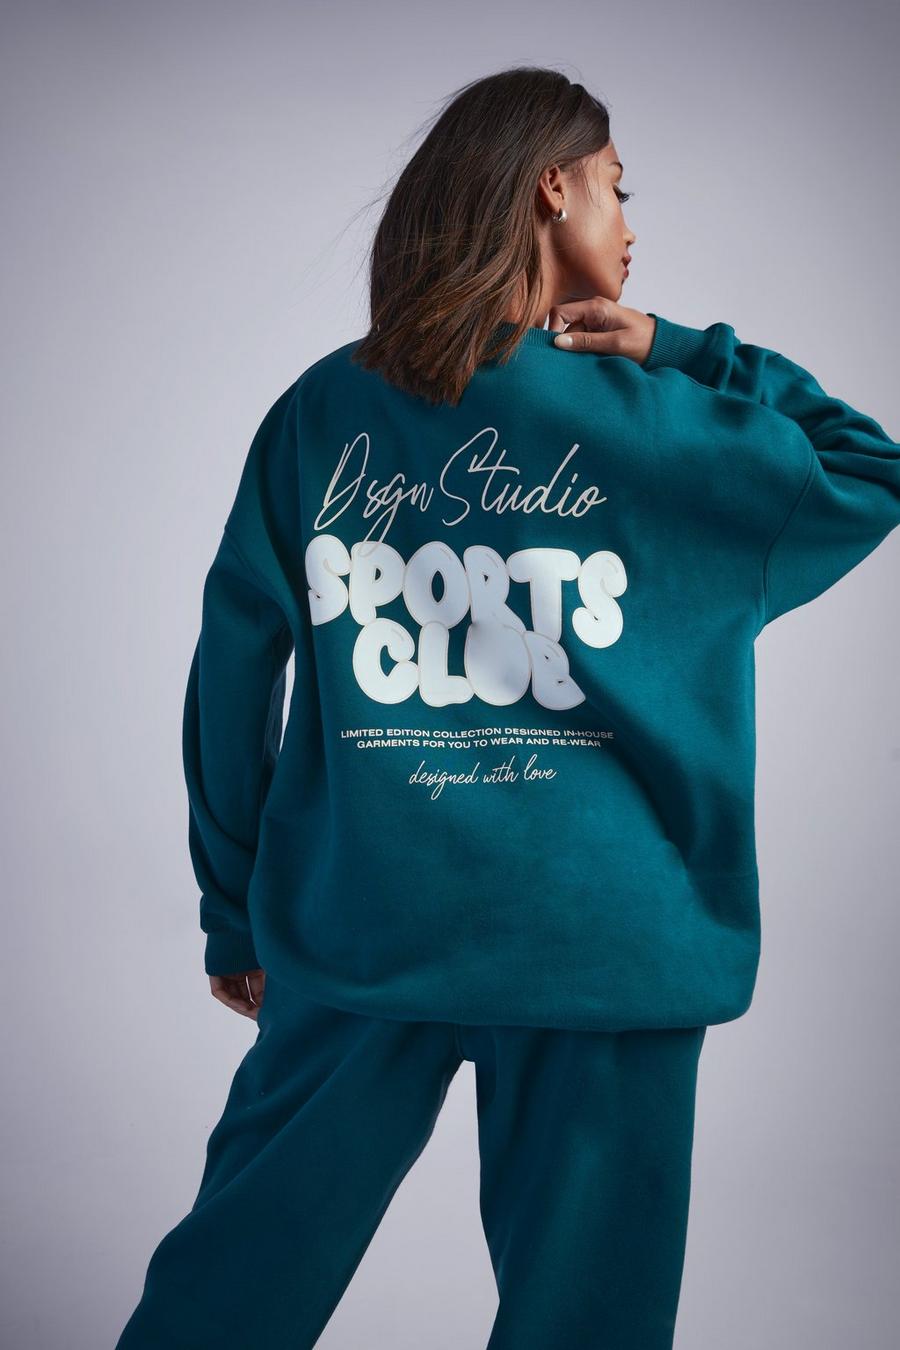 Oversize Sweatshirt mit Dsgn Studio Sports Club Slogan, Teal